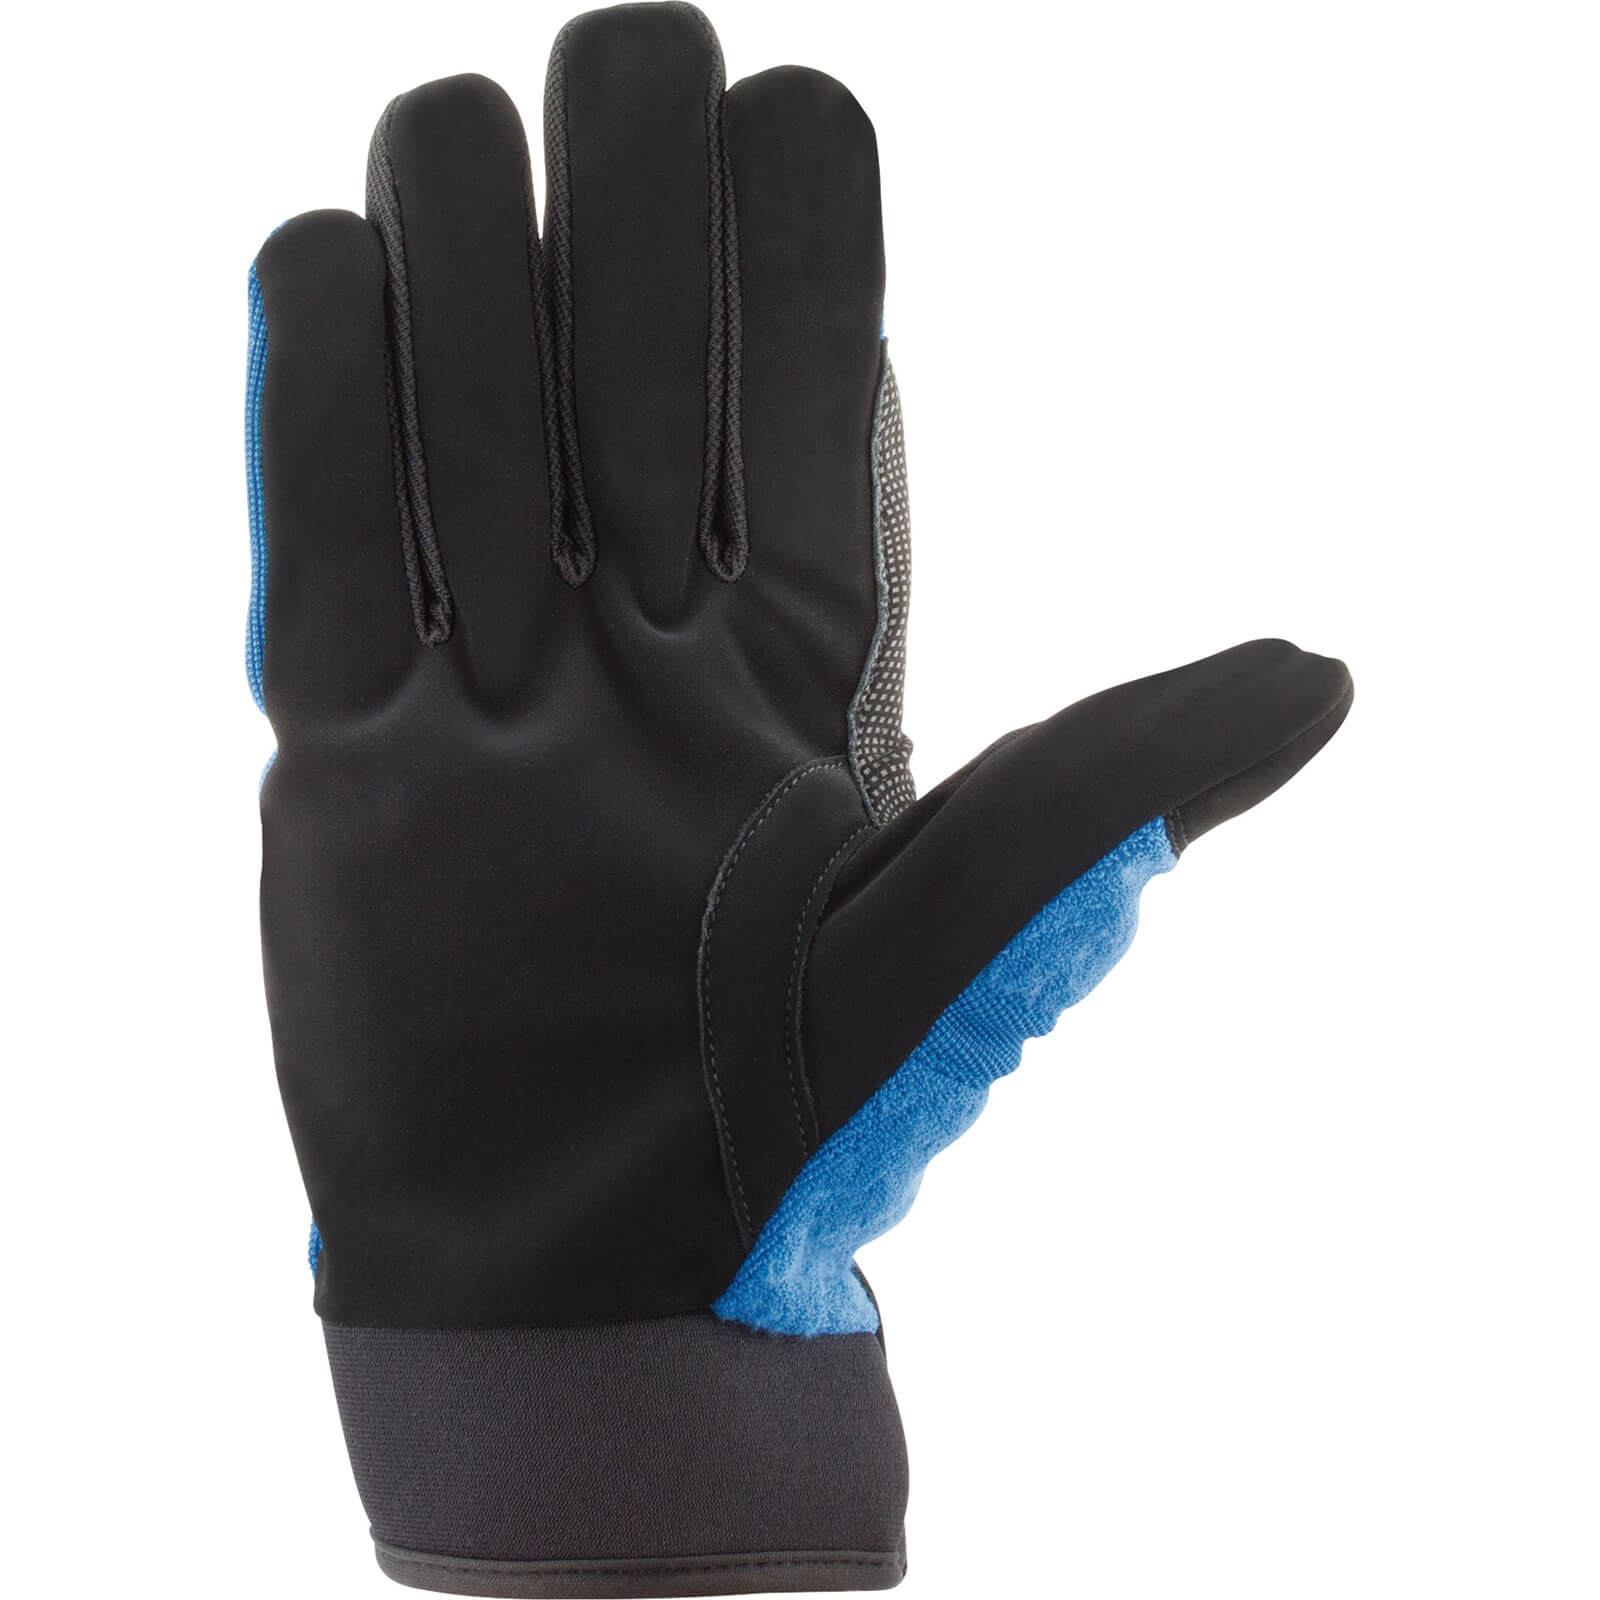 Image of Draper Work Gloves Black / Blue One Size